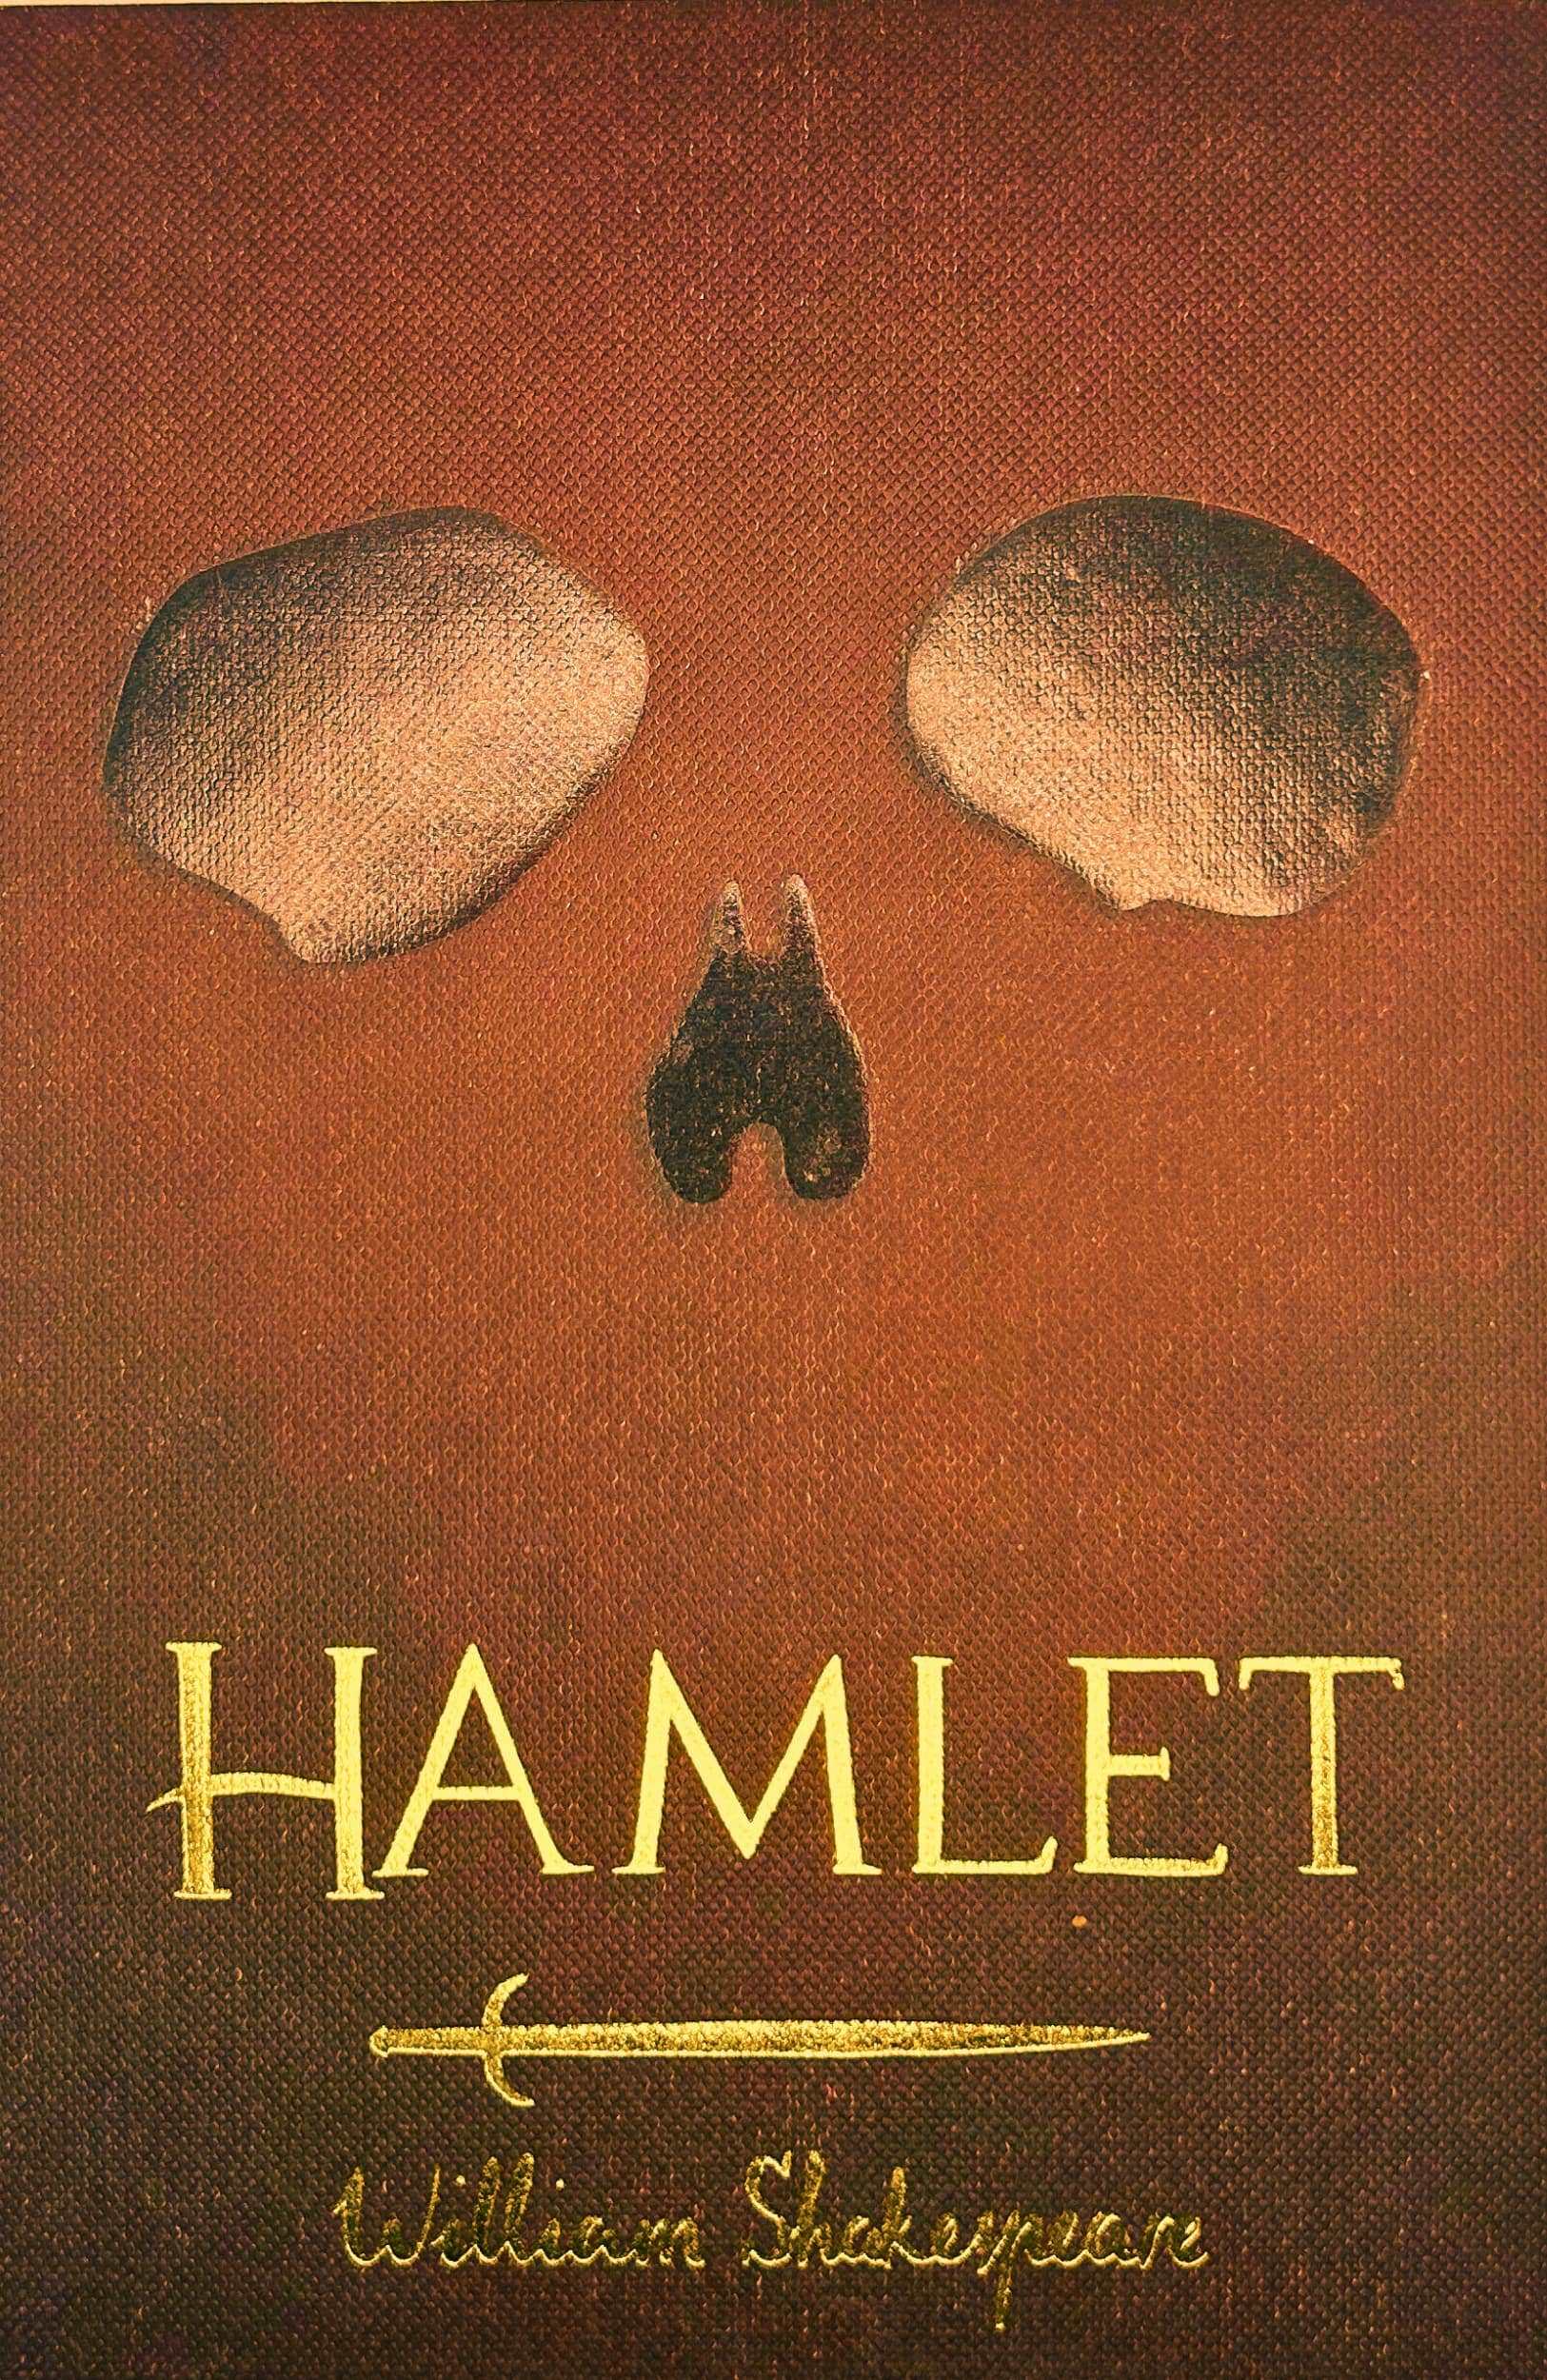 Hamlet | Shakespeare | Wordsworth Collector's Edition | Book